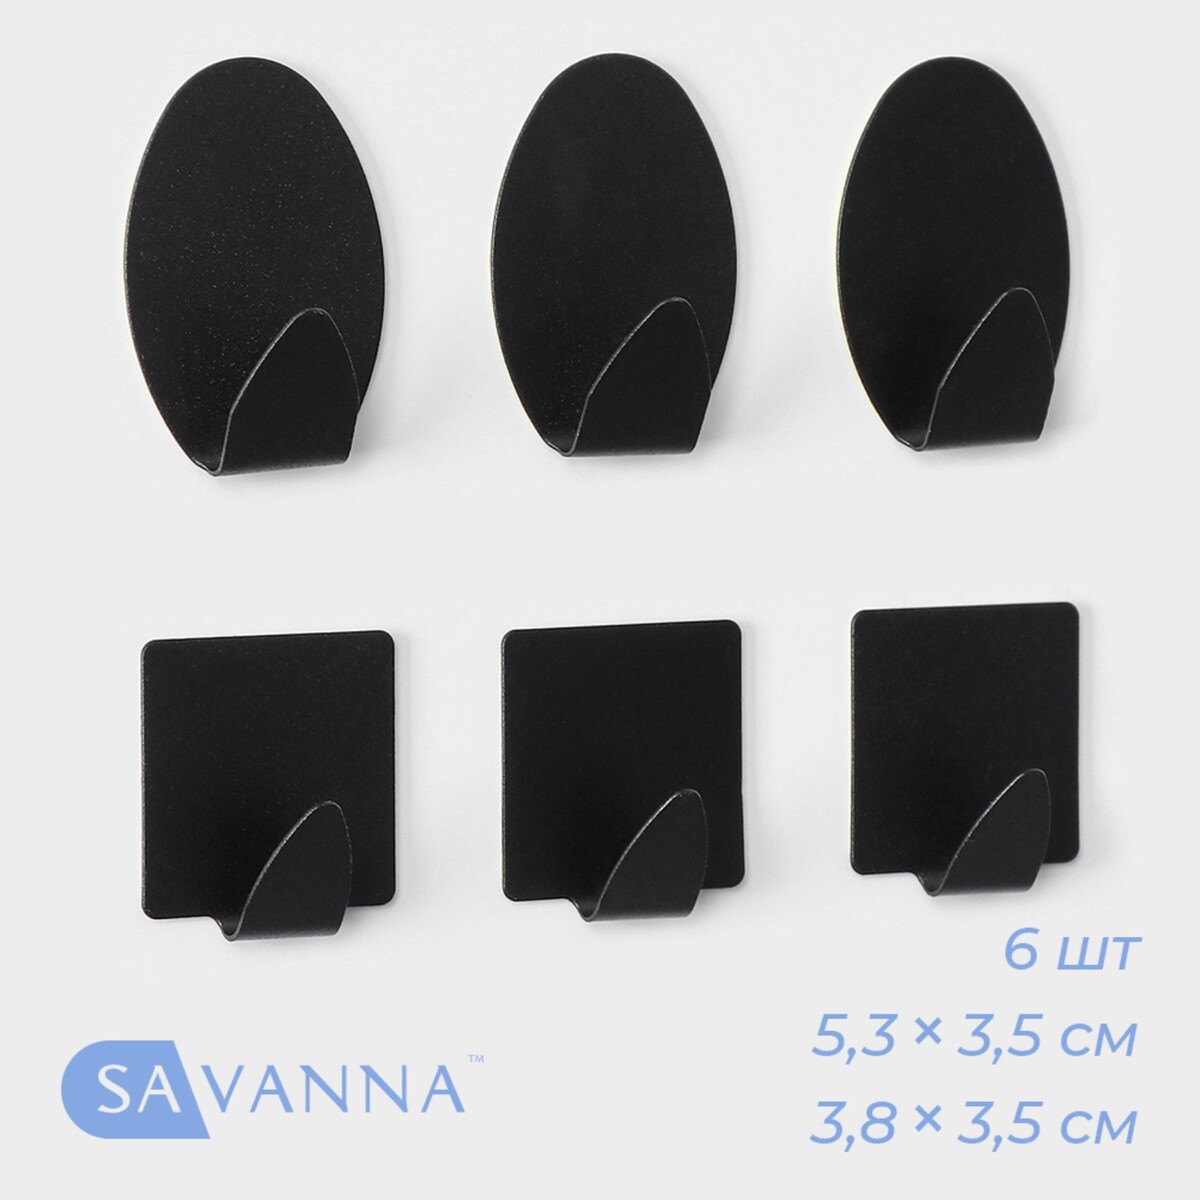     savanna black loft drop box, 6 